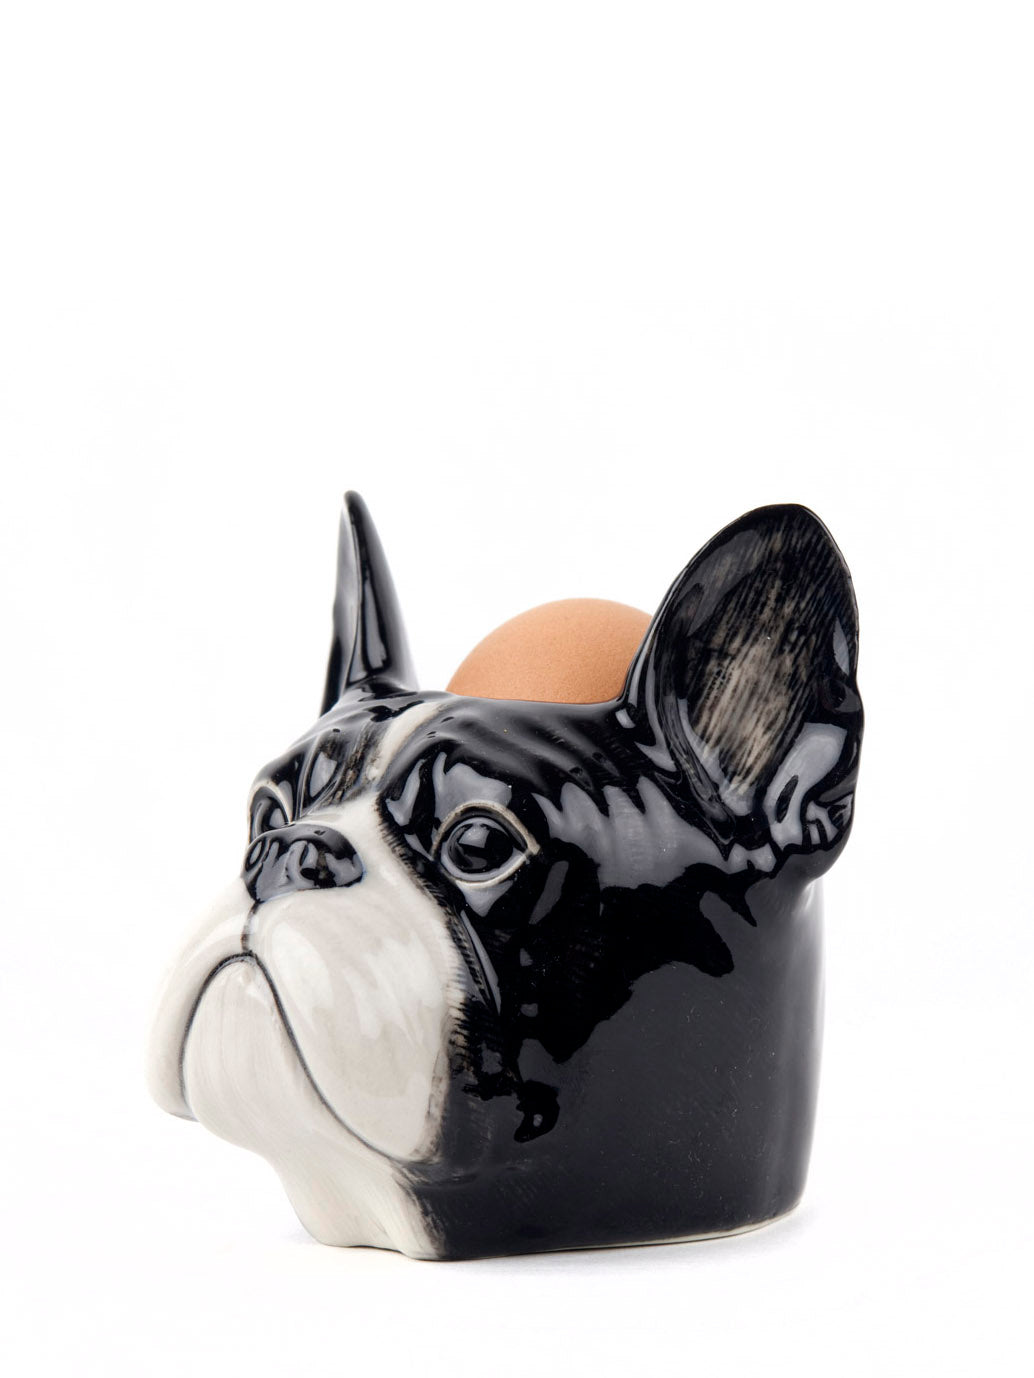 French bulldog egg cup